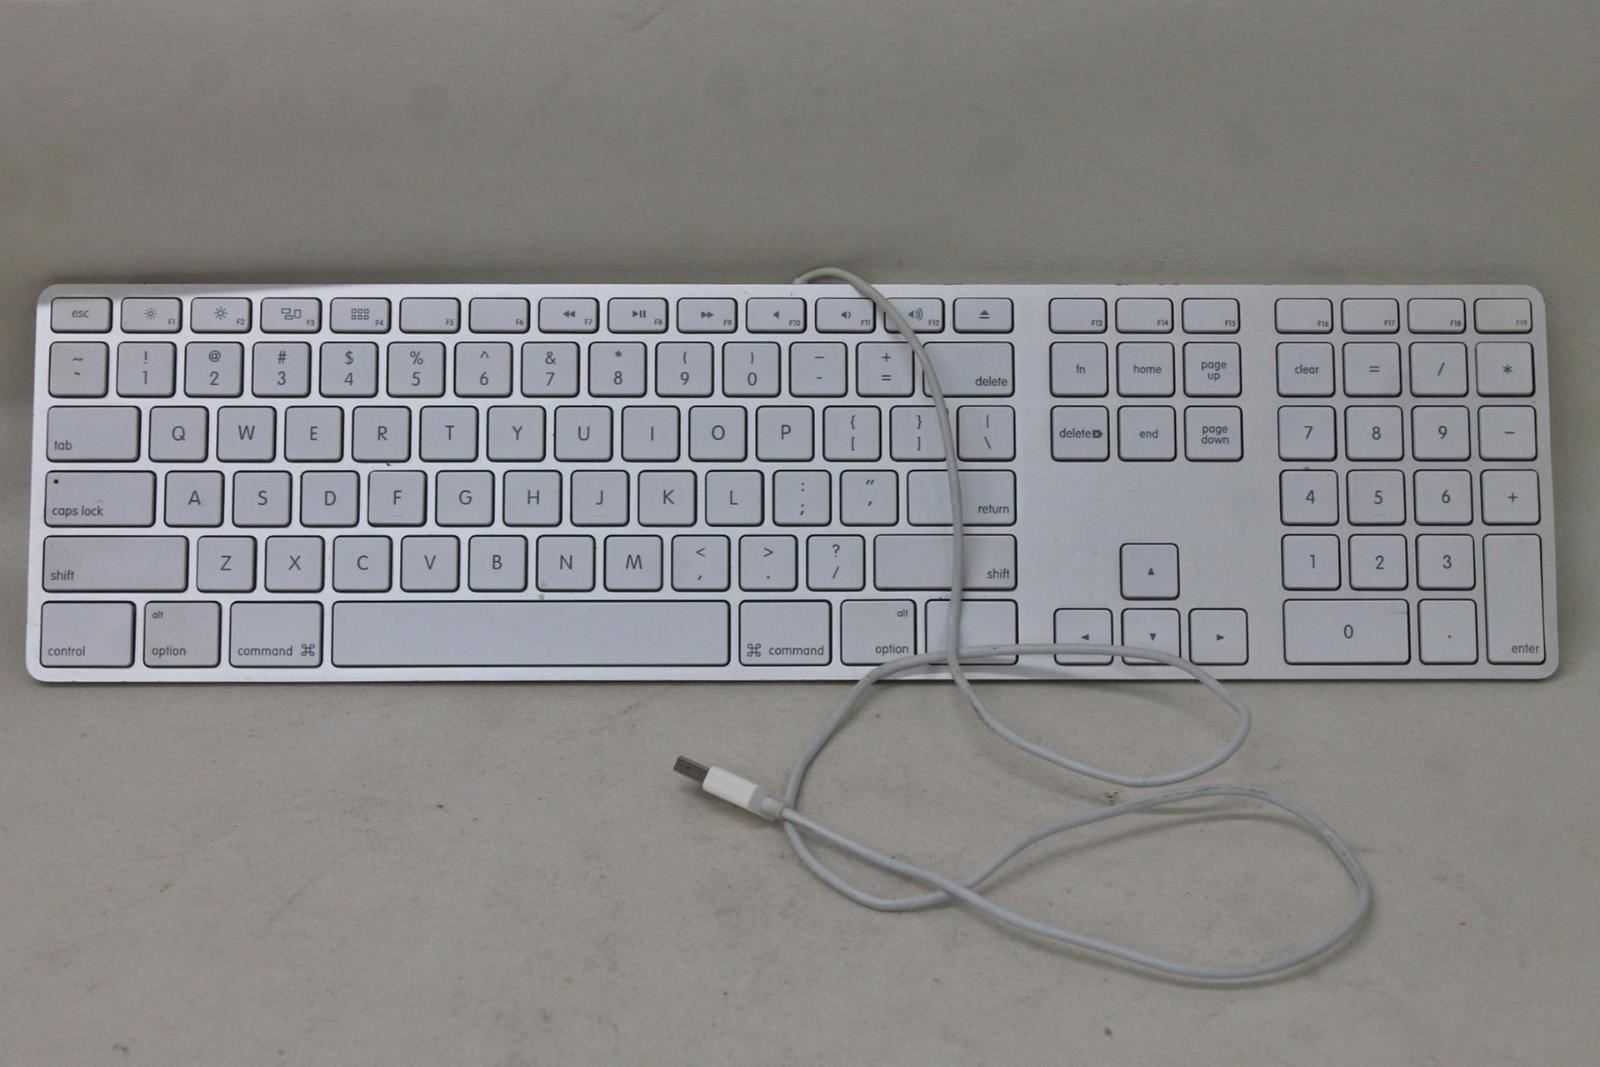 Клавиатура apple mb110 wired keyboard white usb [mb110rs(ru)/b] mb110rs/b (белый) (apple keyboard with numeric keypad) купить за 3990 руб в челябинске, отзывы, видео обзоры и характеристики